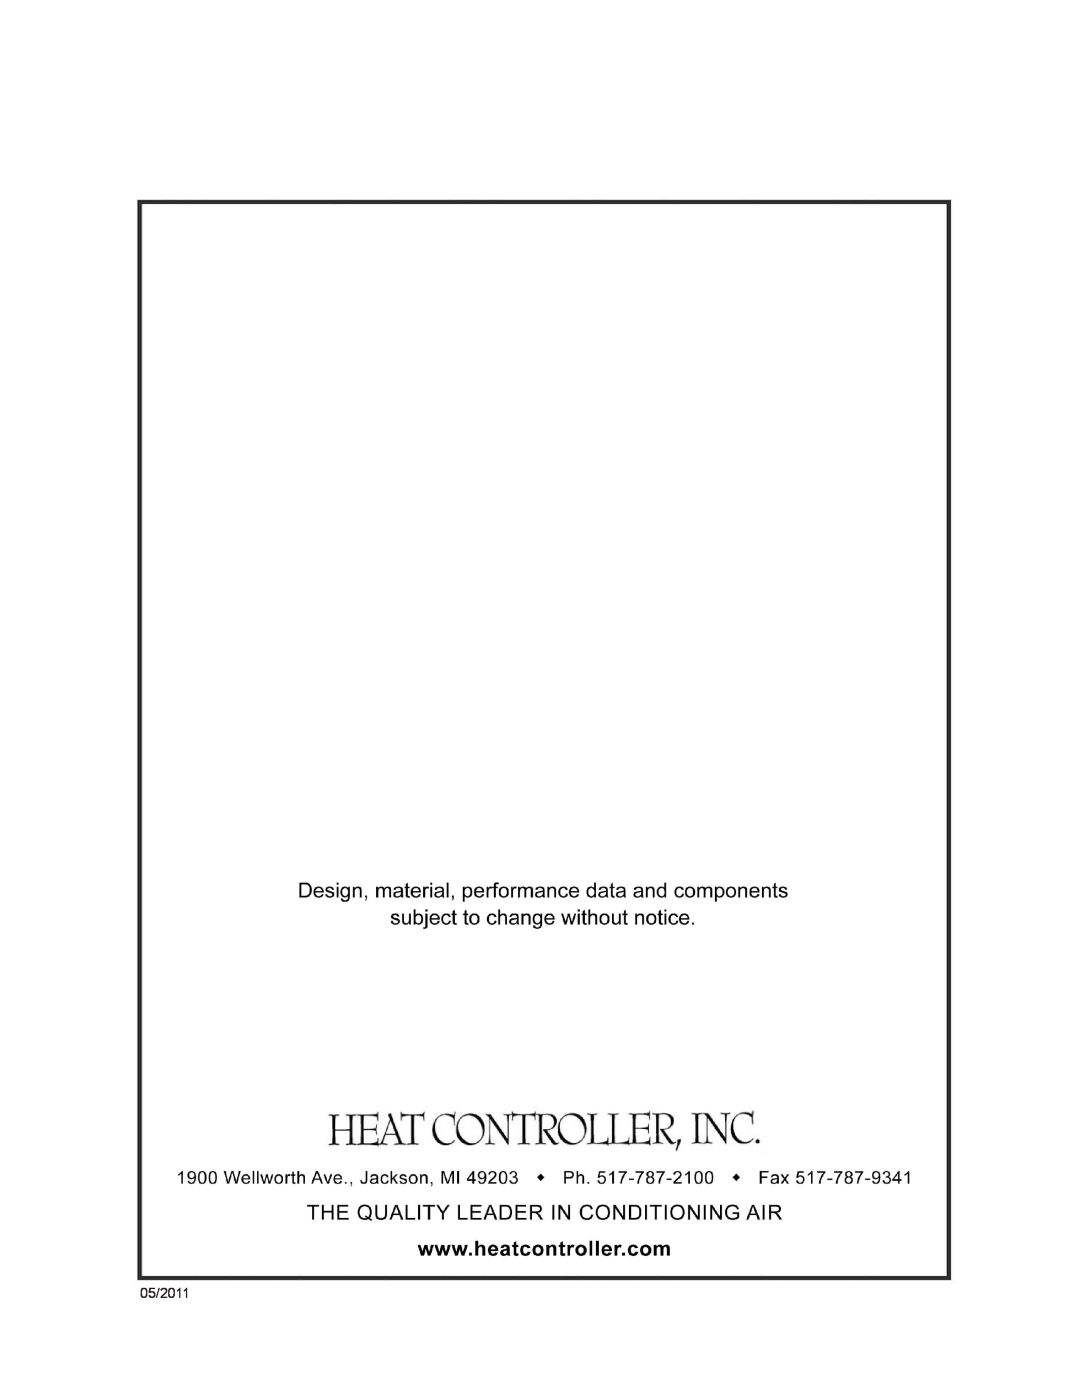 Heat Controller HDG48, HDG60, HDG30, HDG24, HDG42, HDG36 installation instructions 05/2011 